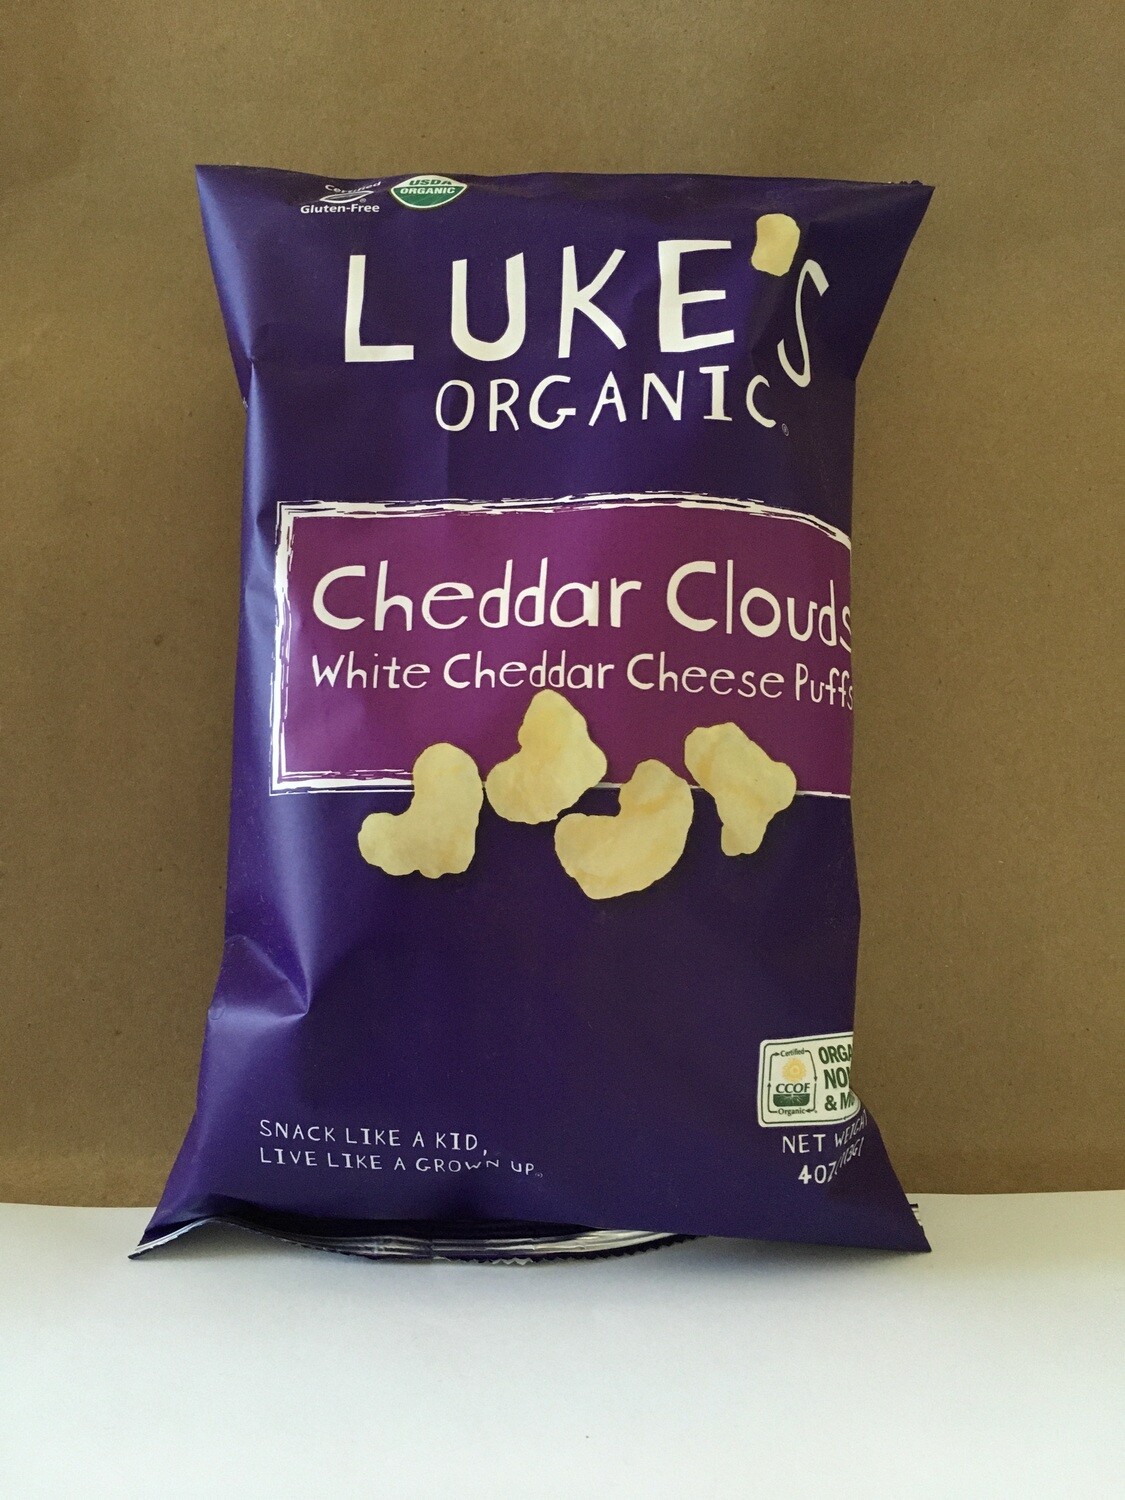 Grocery / Snack / Luke's Organic Cheddar Clouds, 4 oz